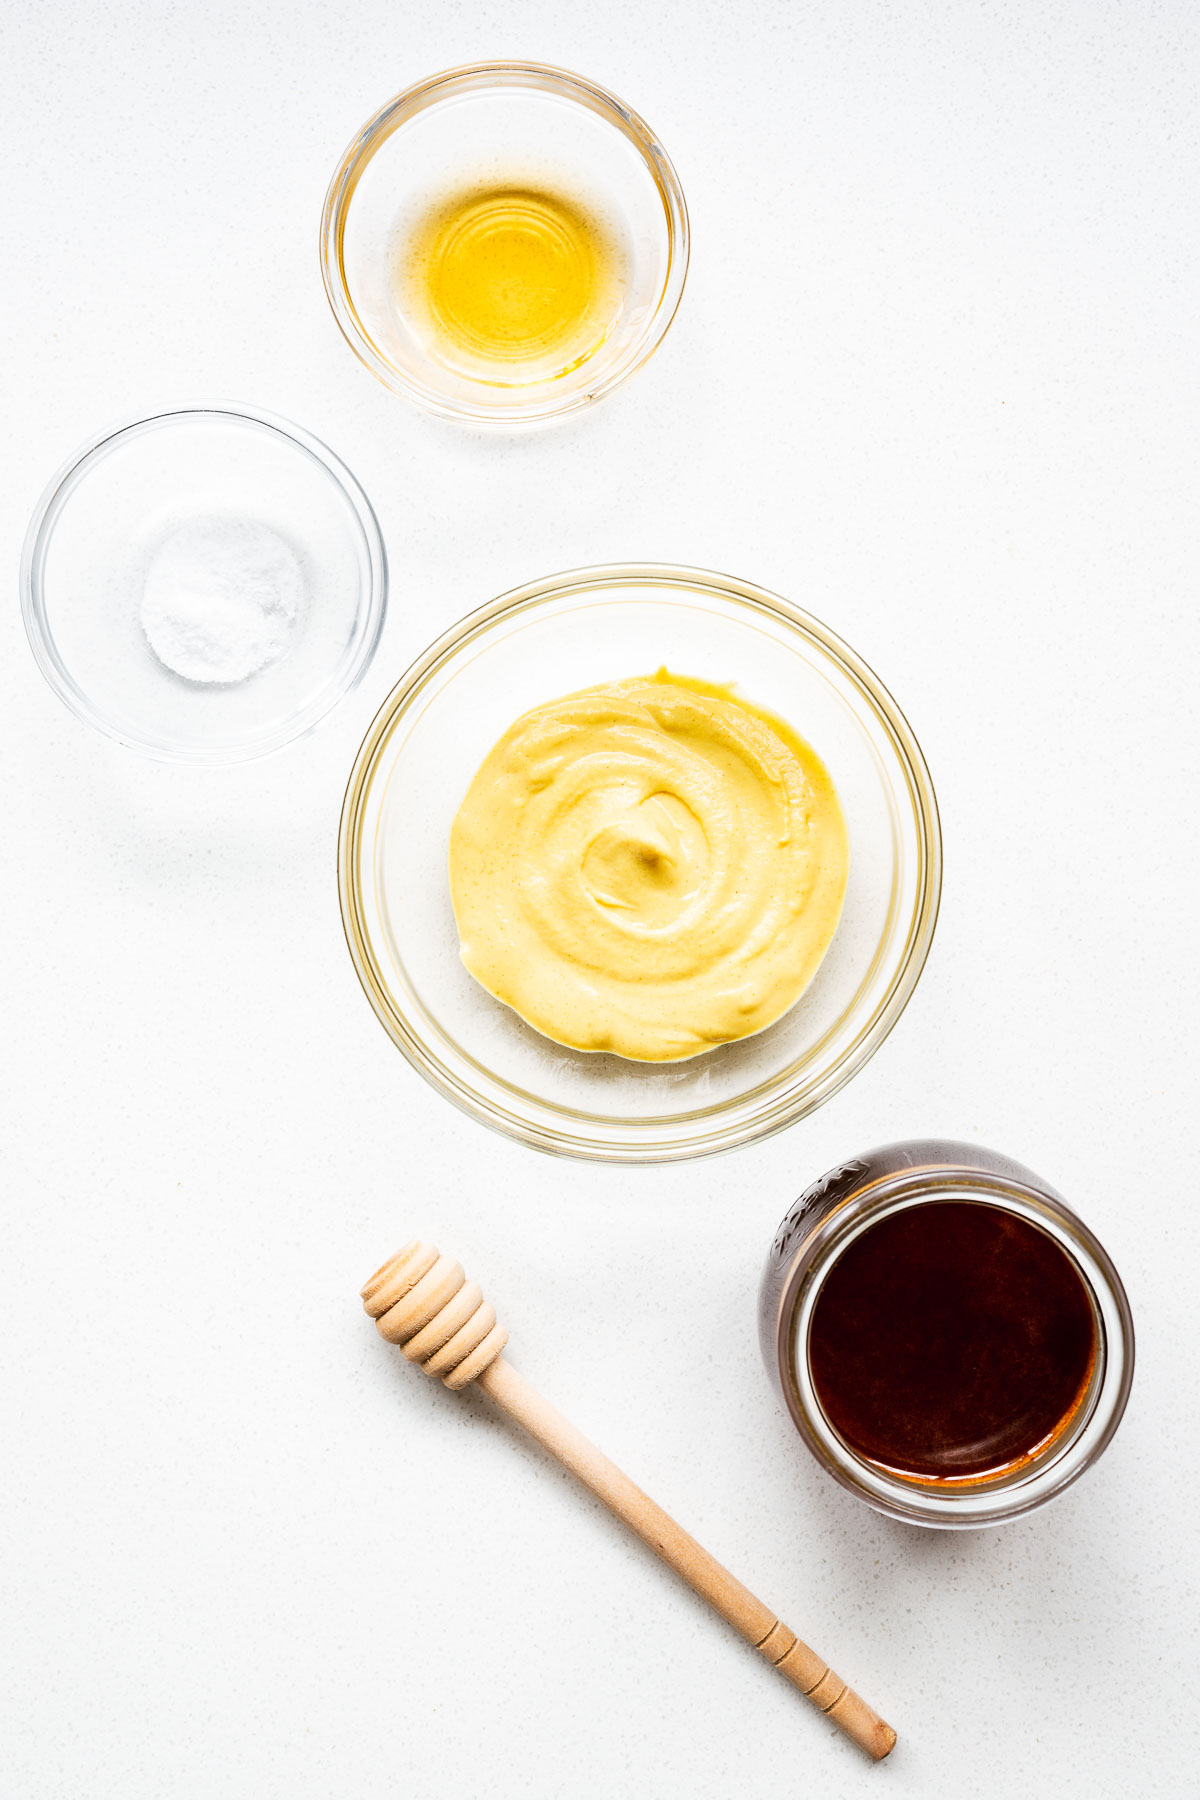 Hot honey mustard sauce ingredients arranged on a kitchen counter.